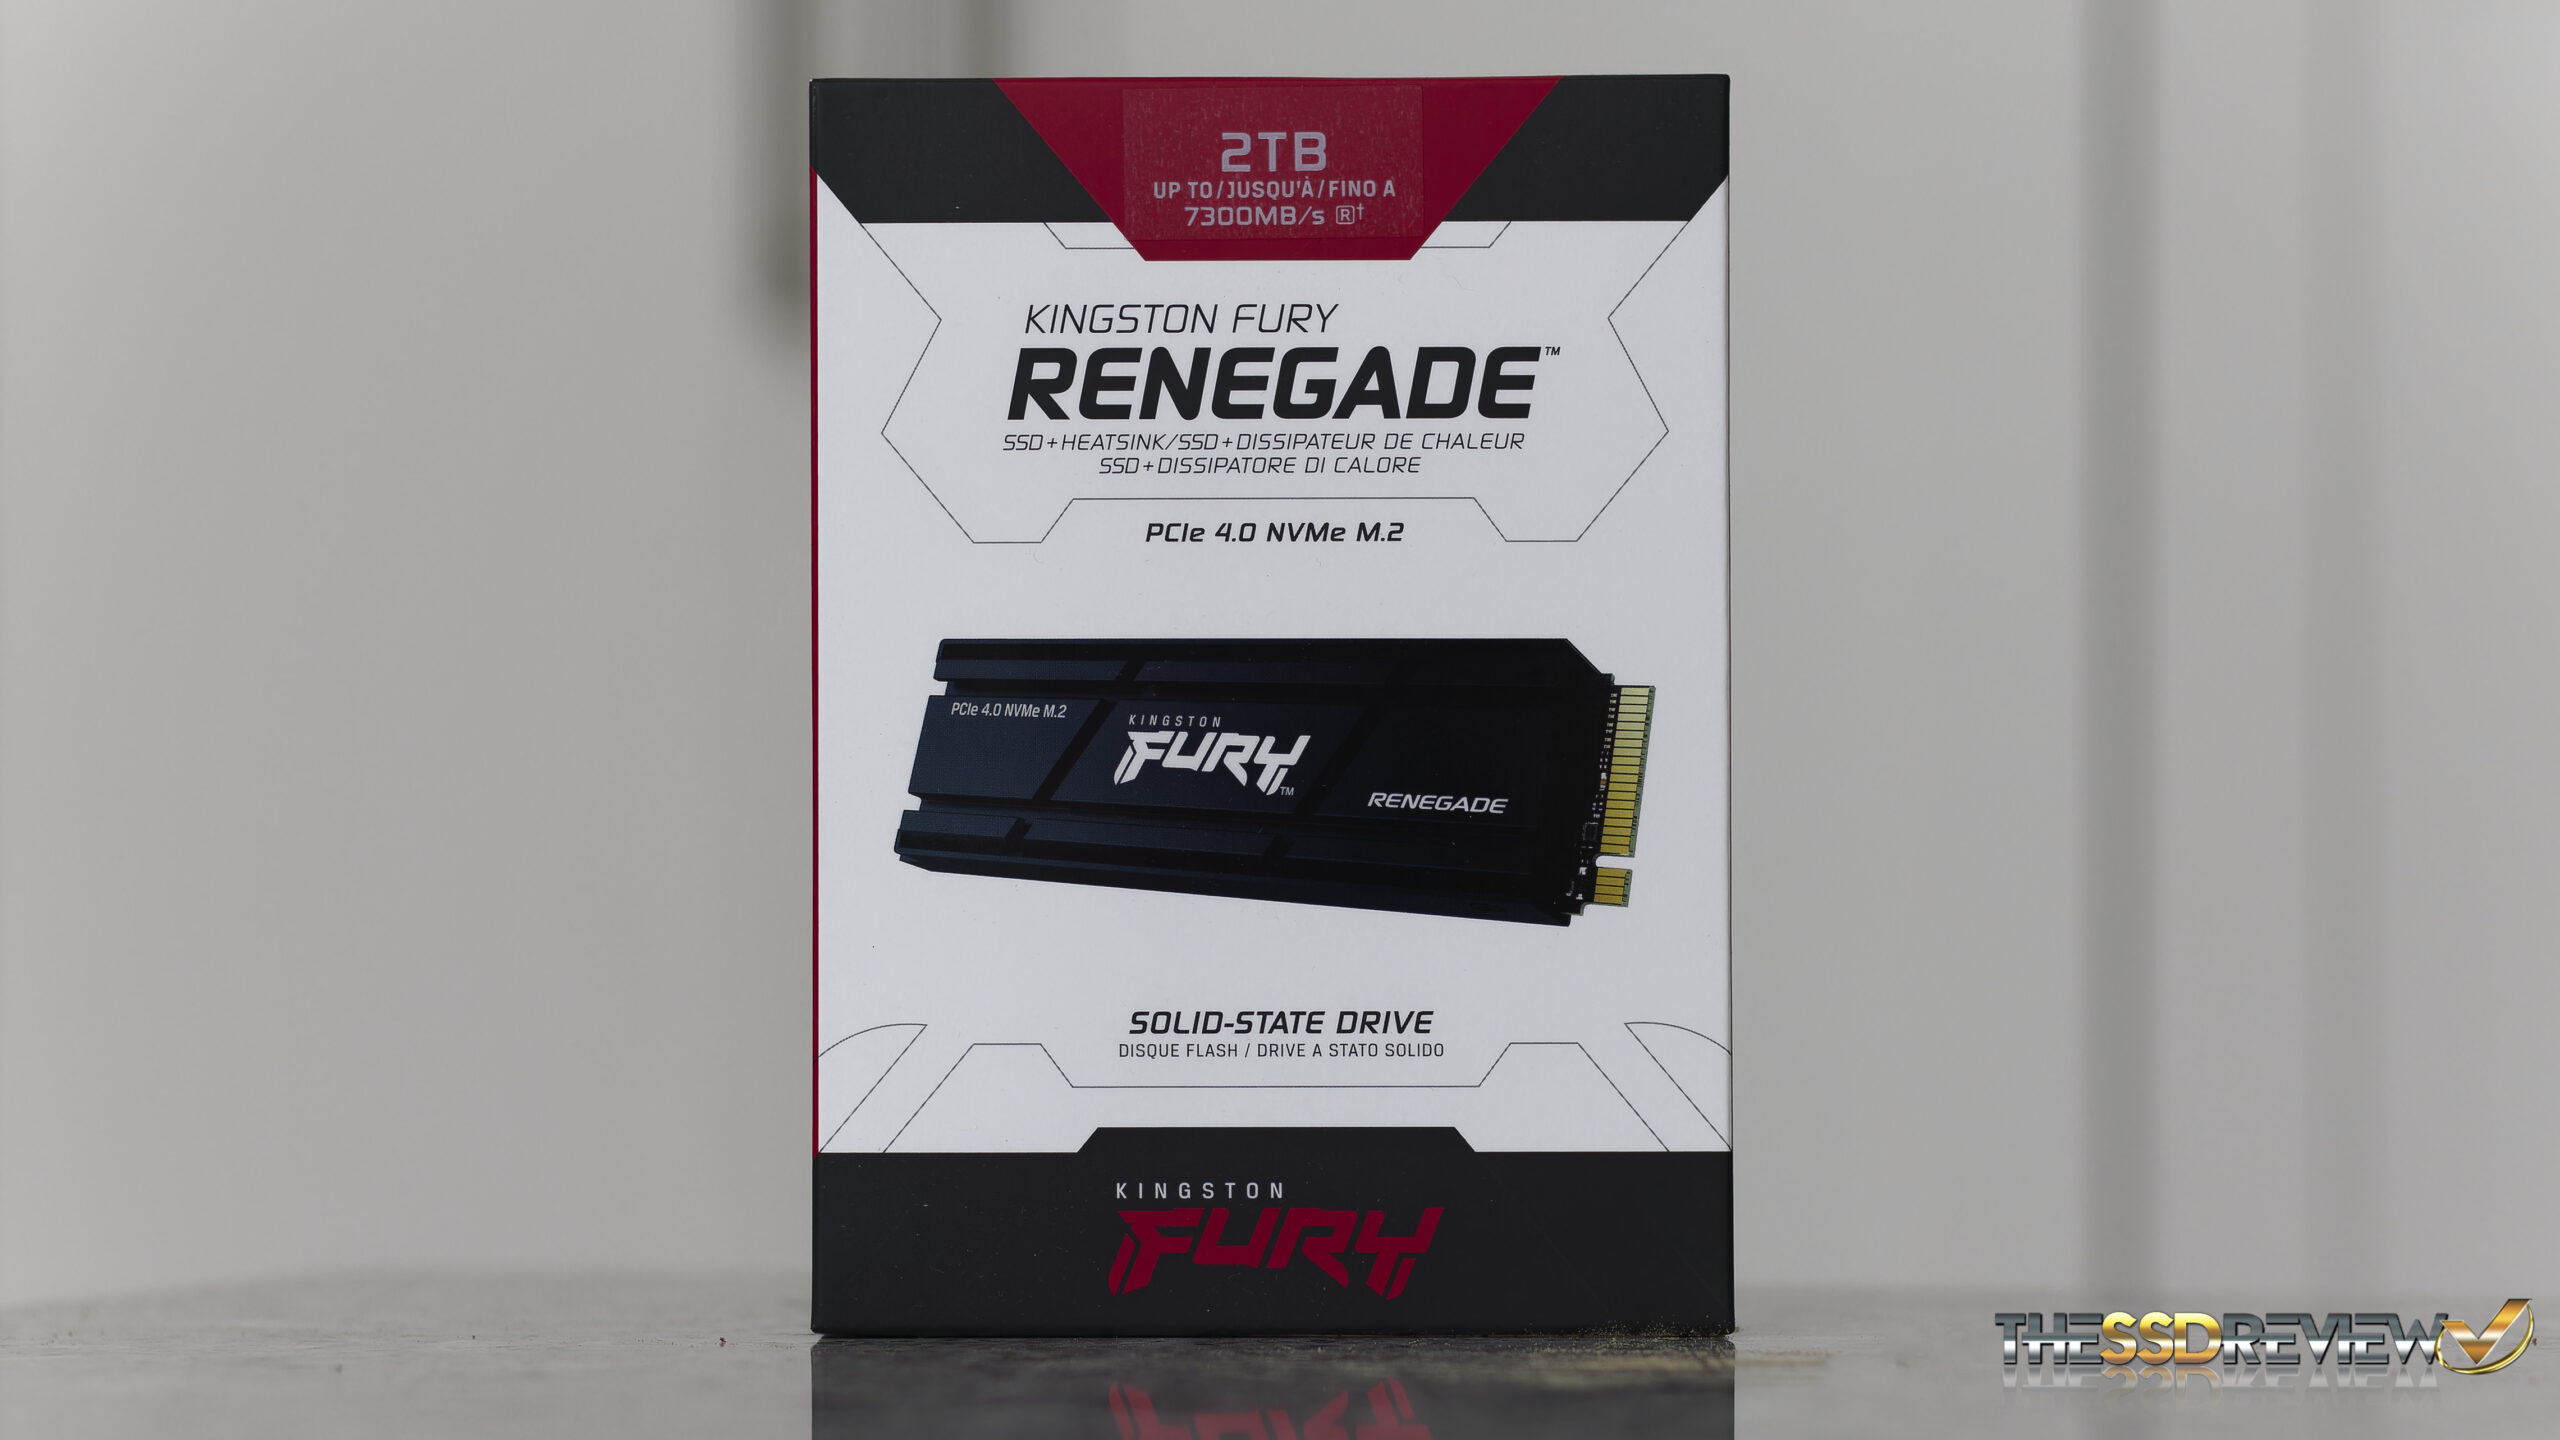 Kingston FURY Renegade SSD 2 To - Coolblue - avant 23:59, demain